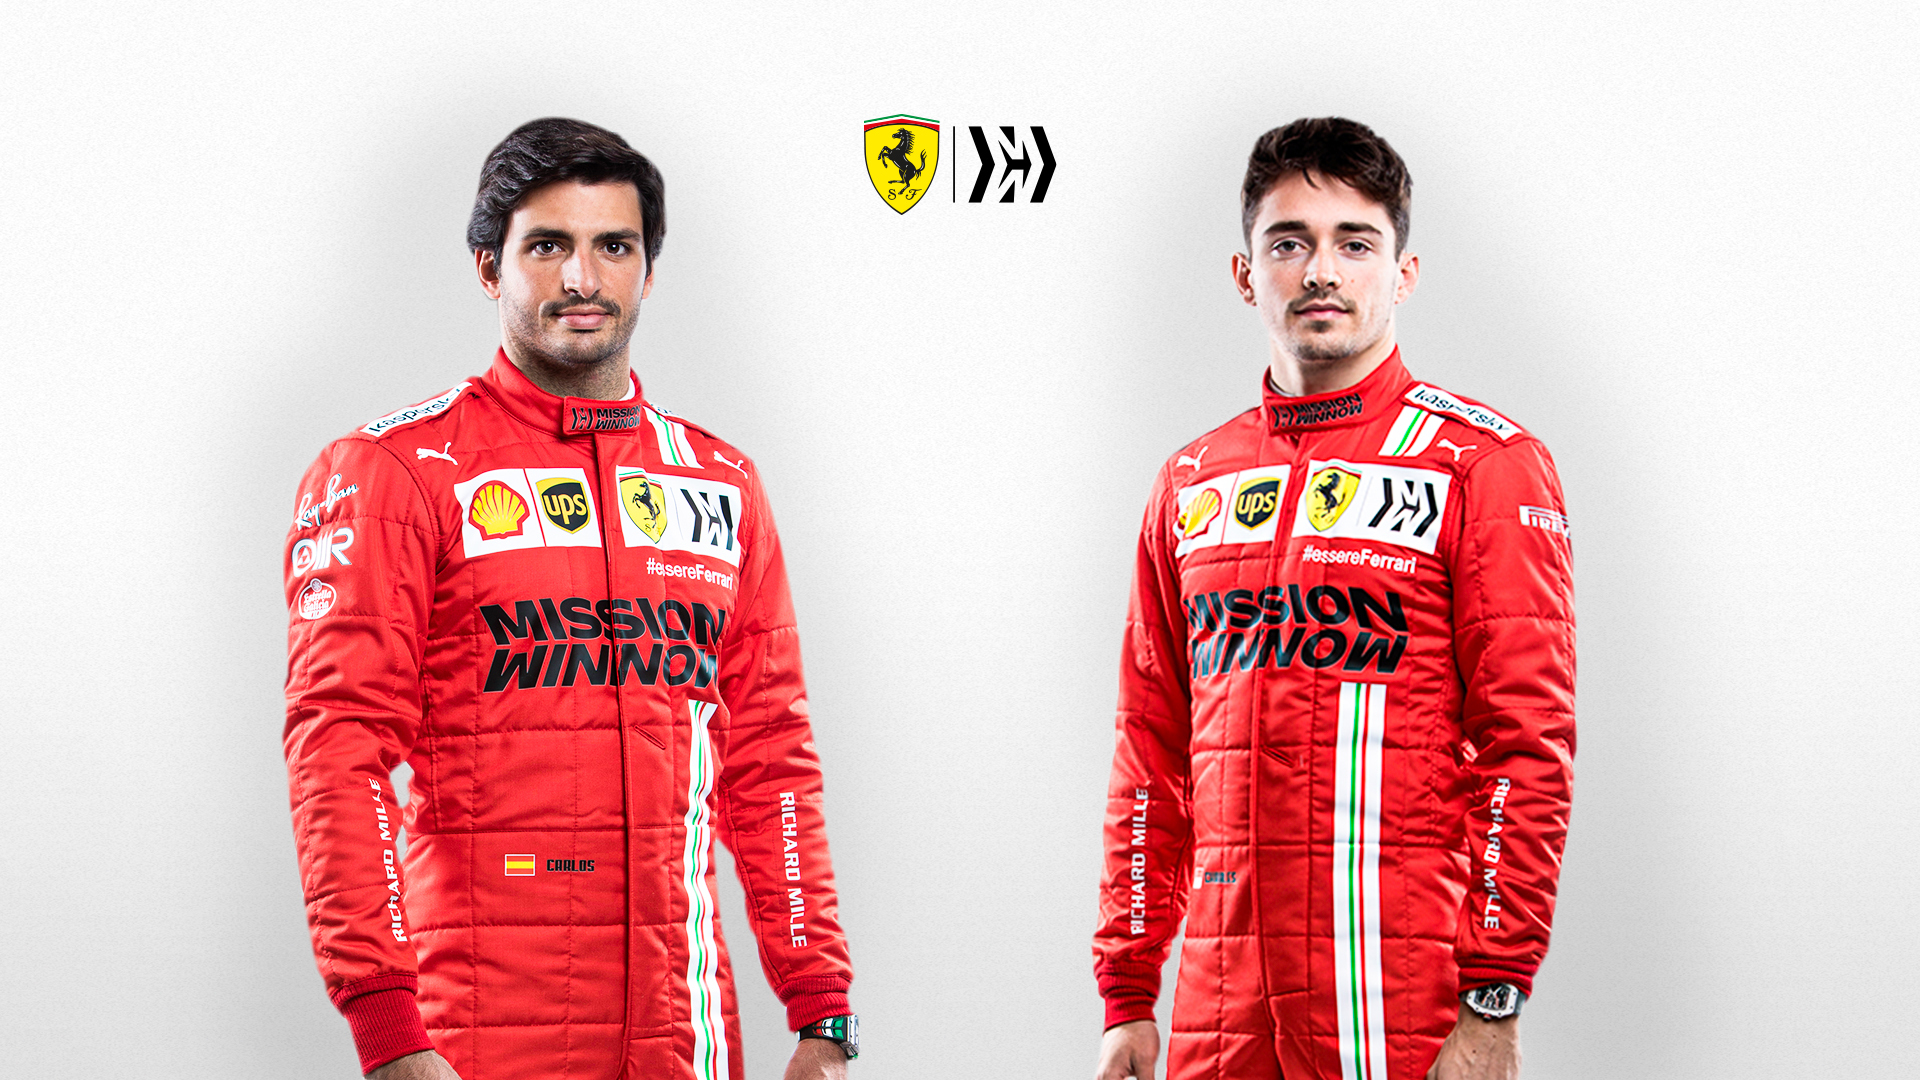 Leclerc e Sainz in coro: “Ferrari deve tornare a vincere!”